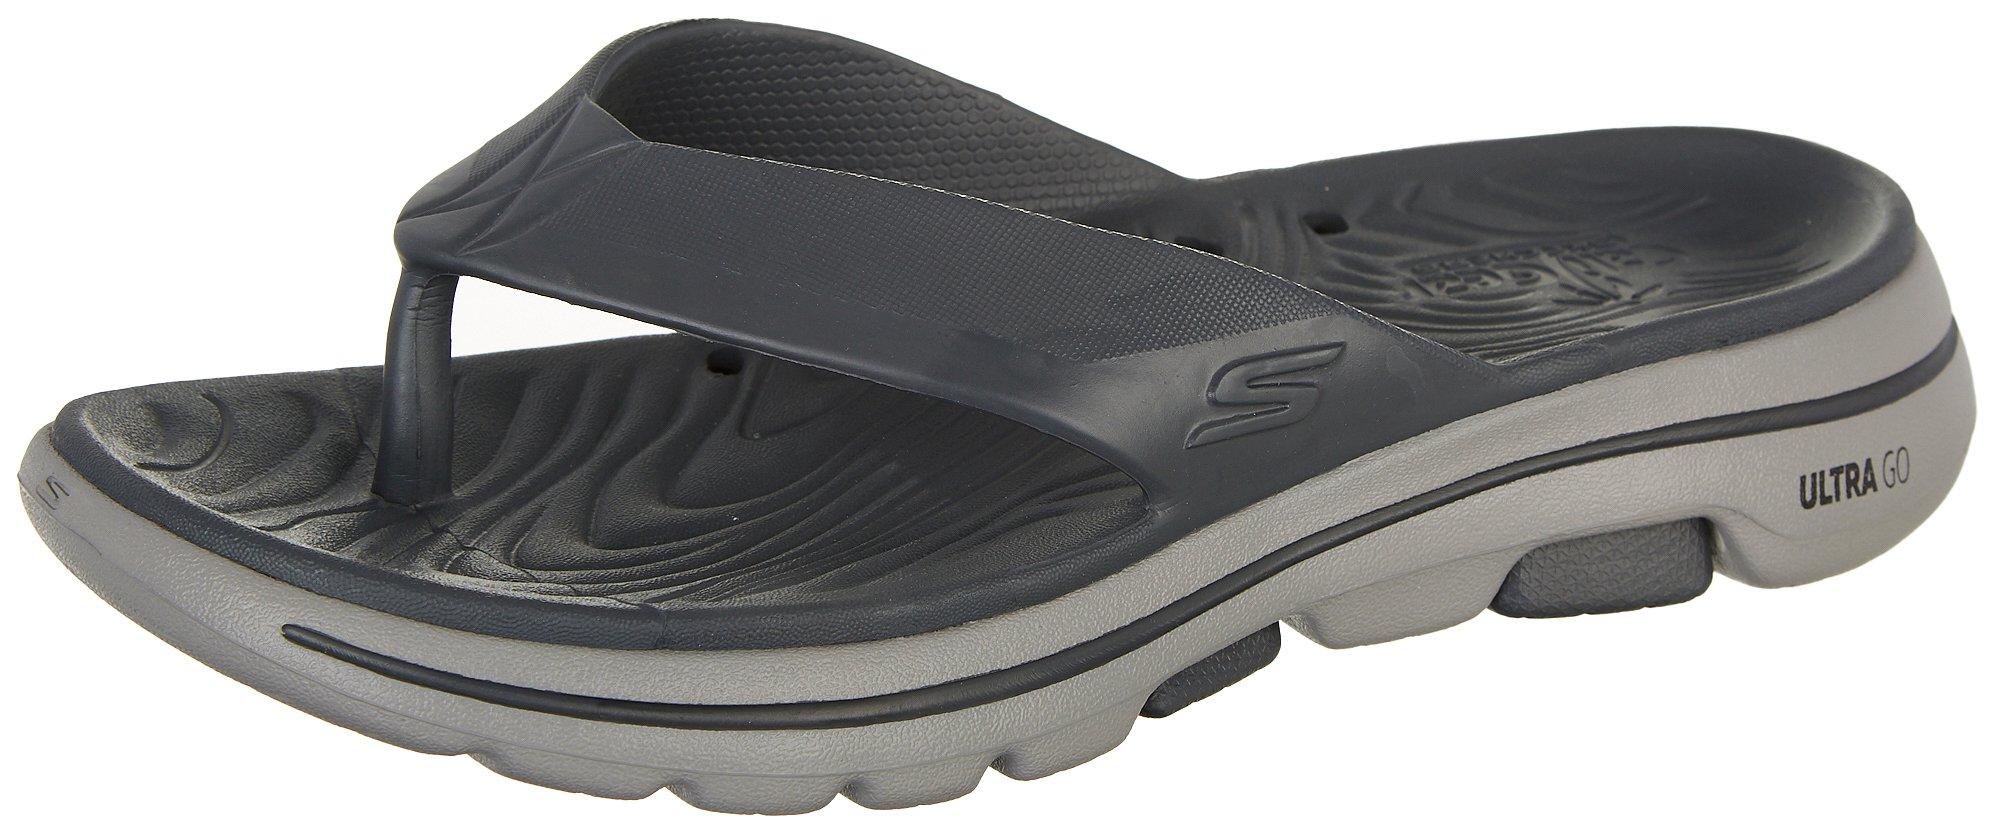 skechers sandals for men